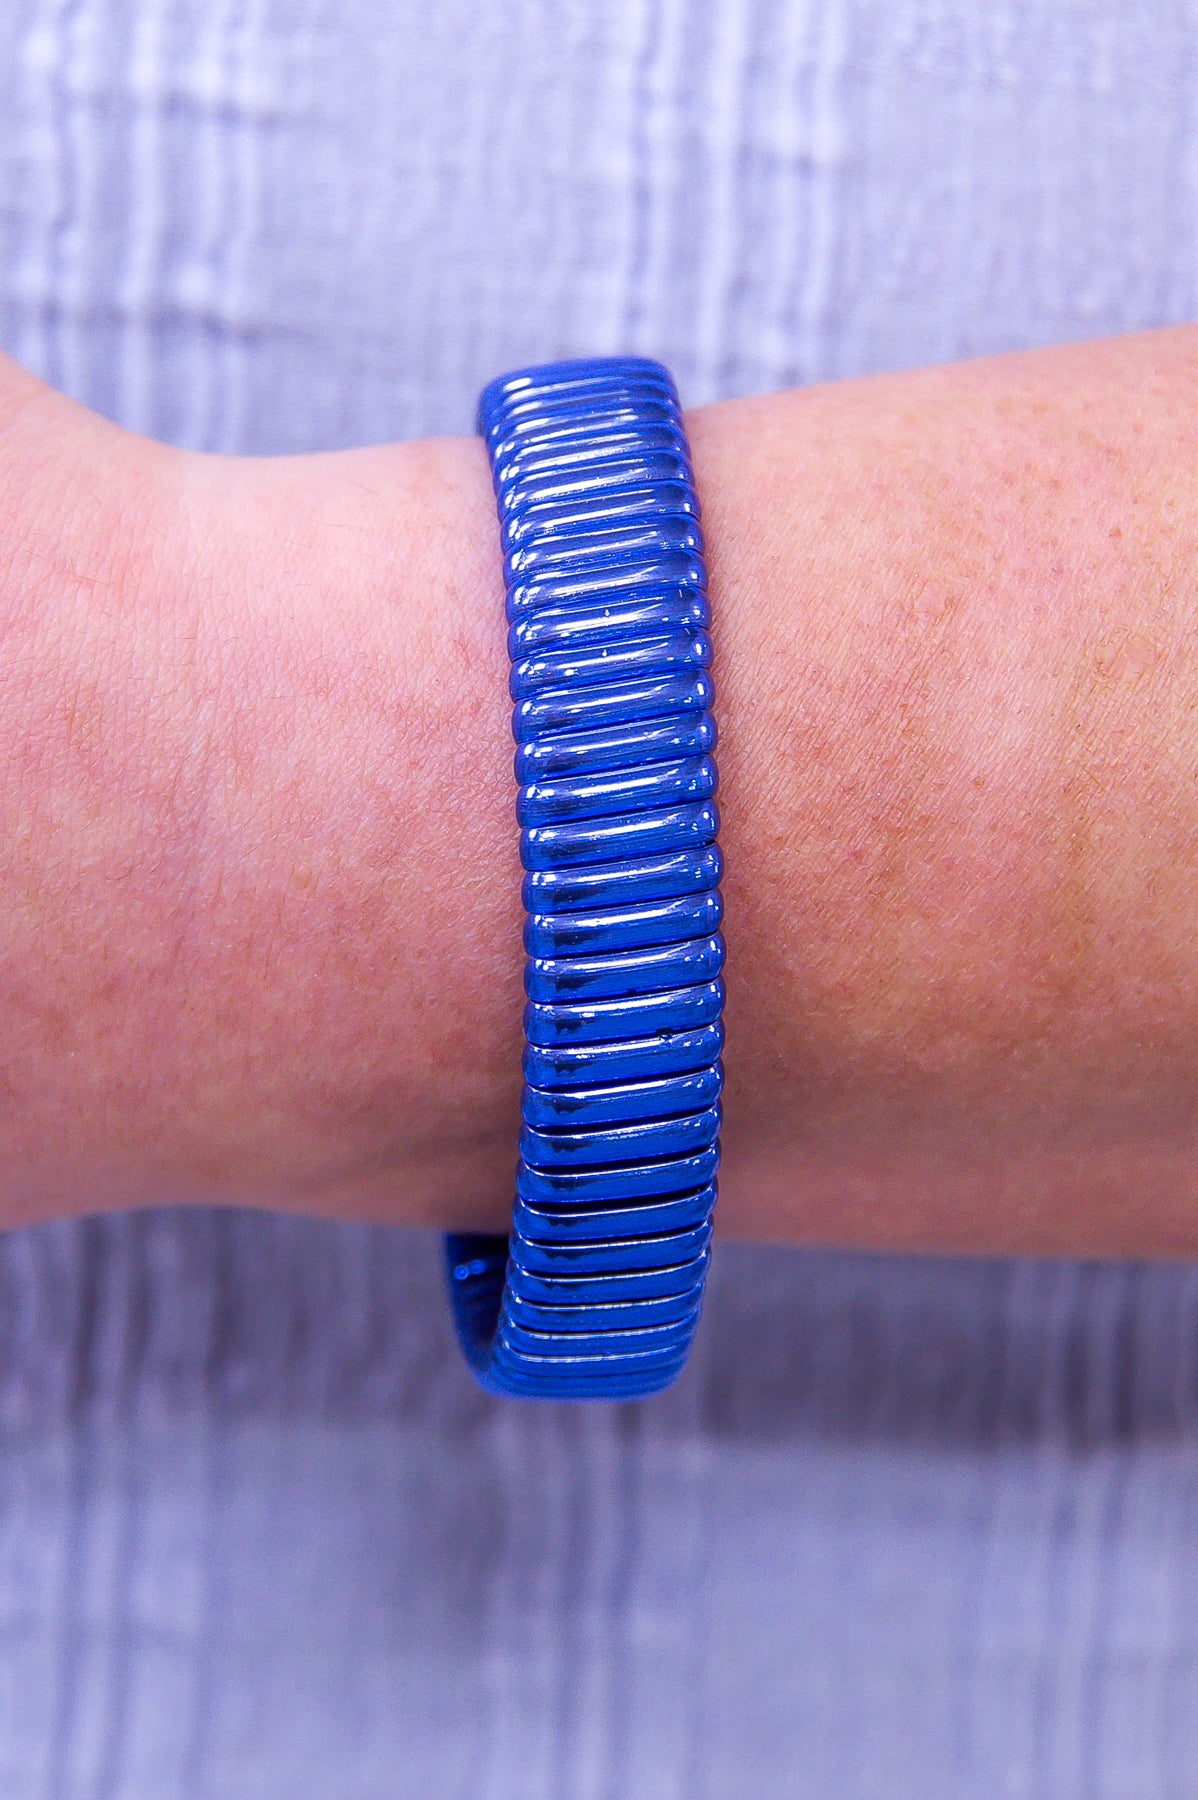 Blue Textured Cuff Bracelet - BRC3414BL